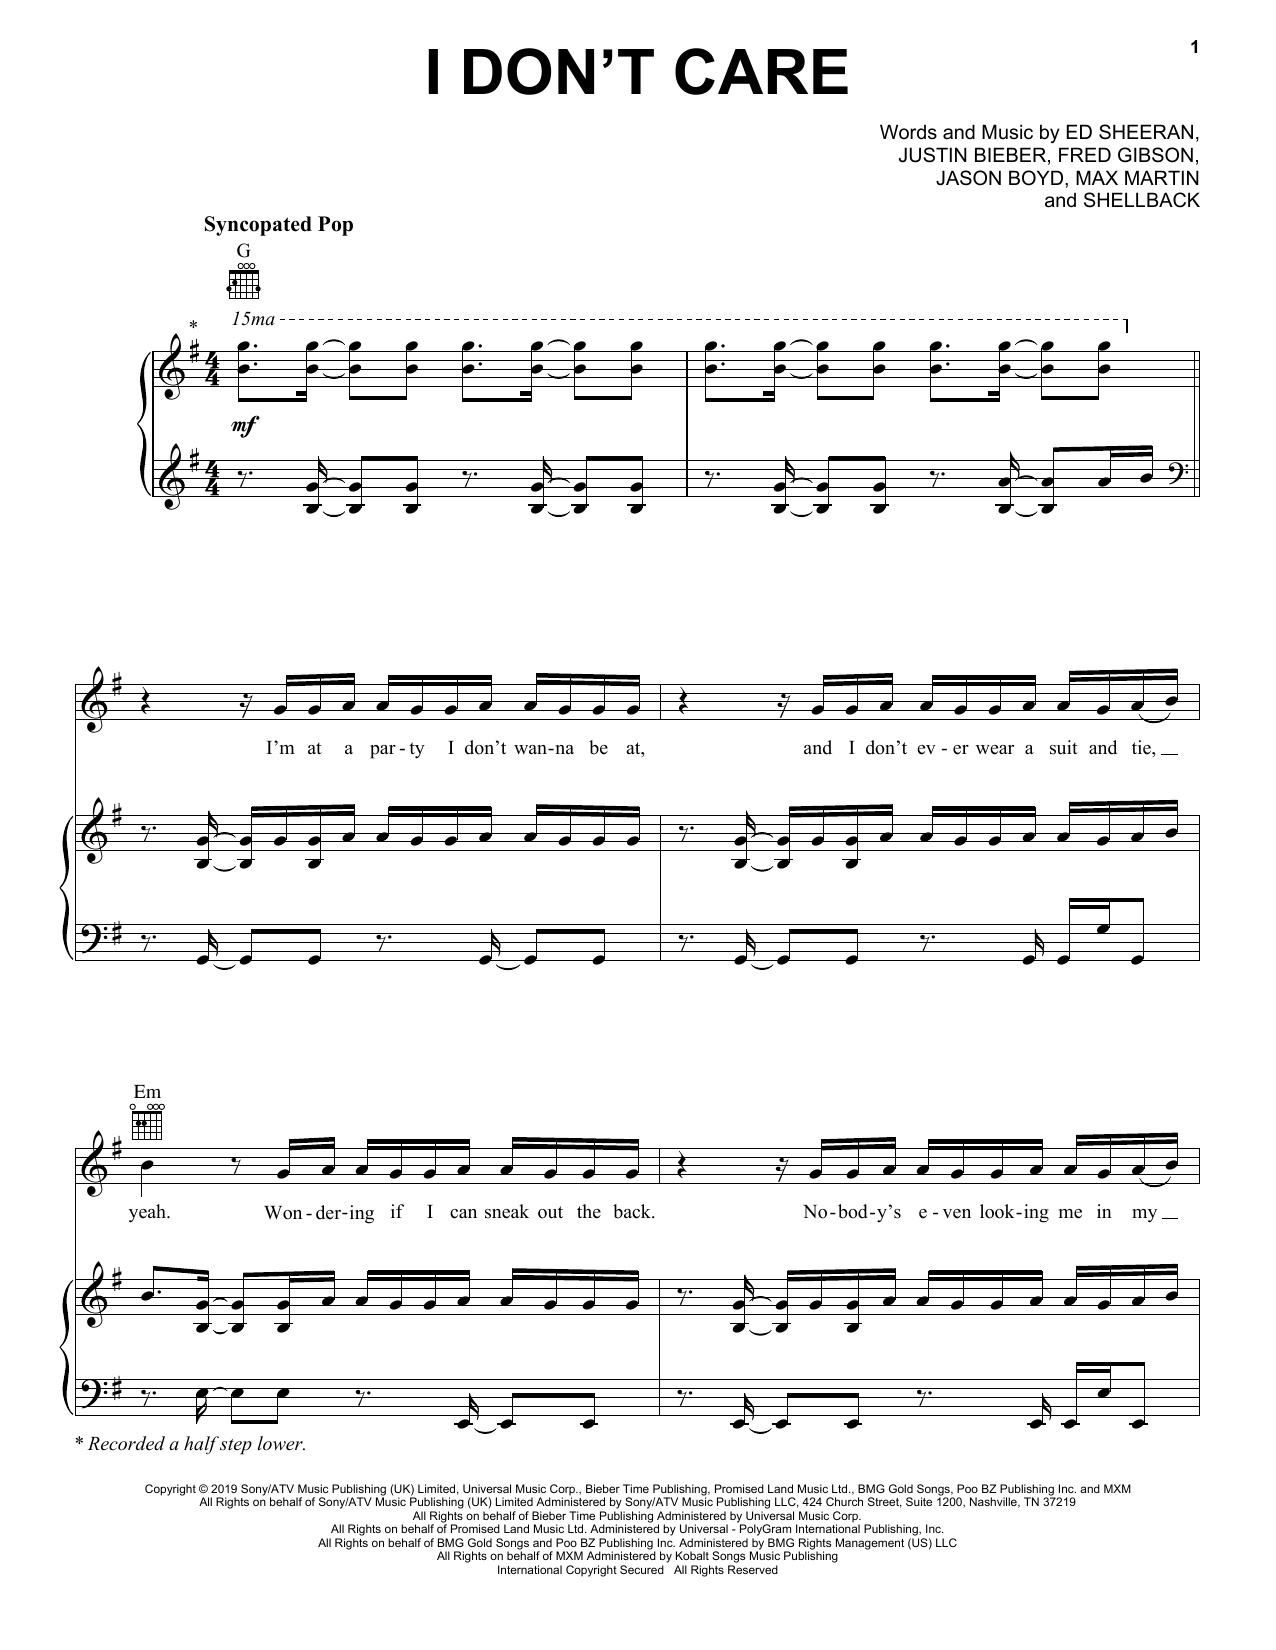 Ed Sheeran & Justin Bieber I Don't Care Sheet Music Notes & Chords for Big Note Piano - Download or Print PDF